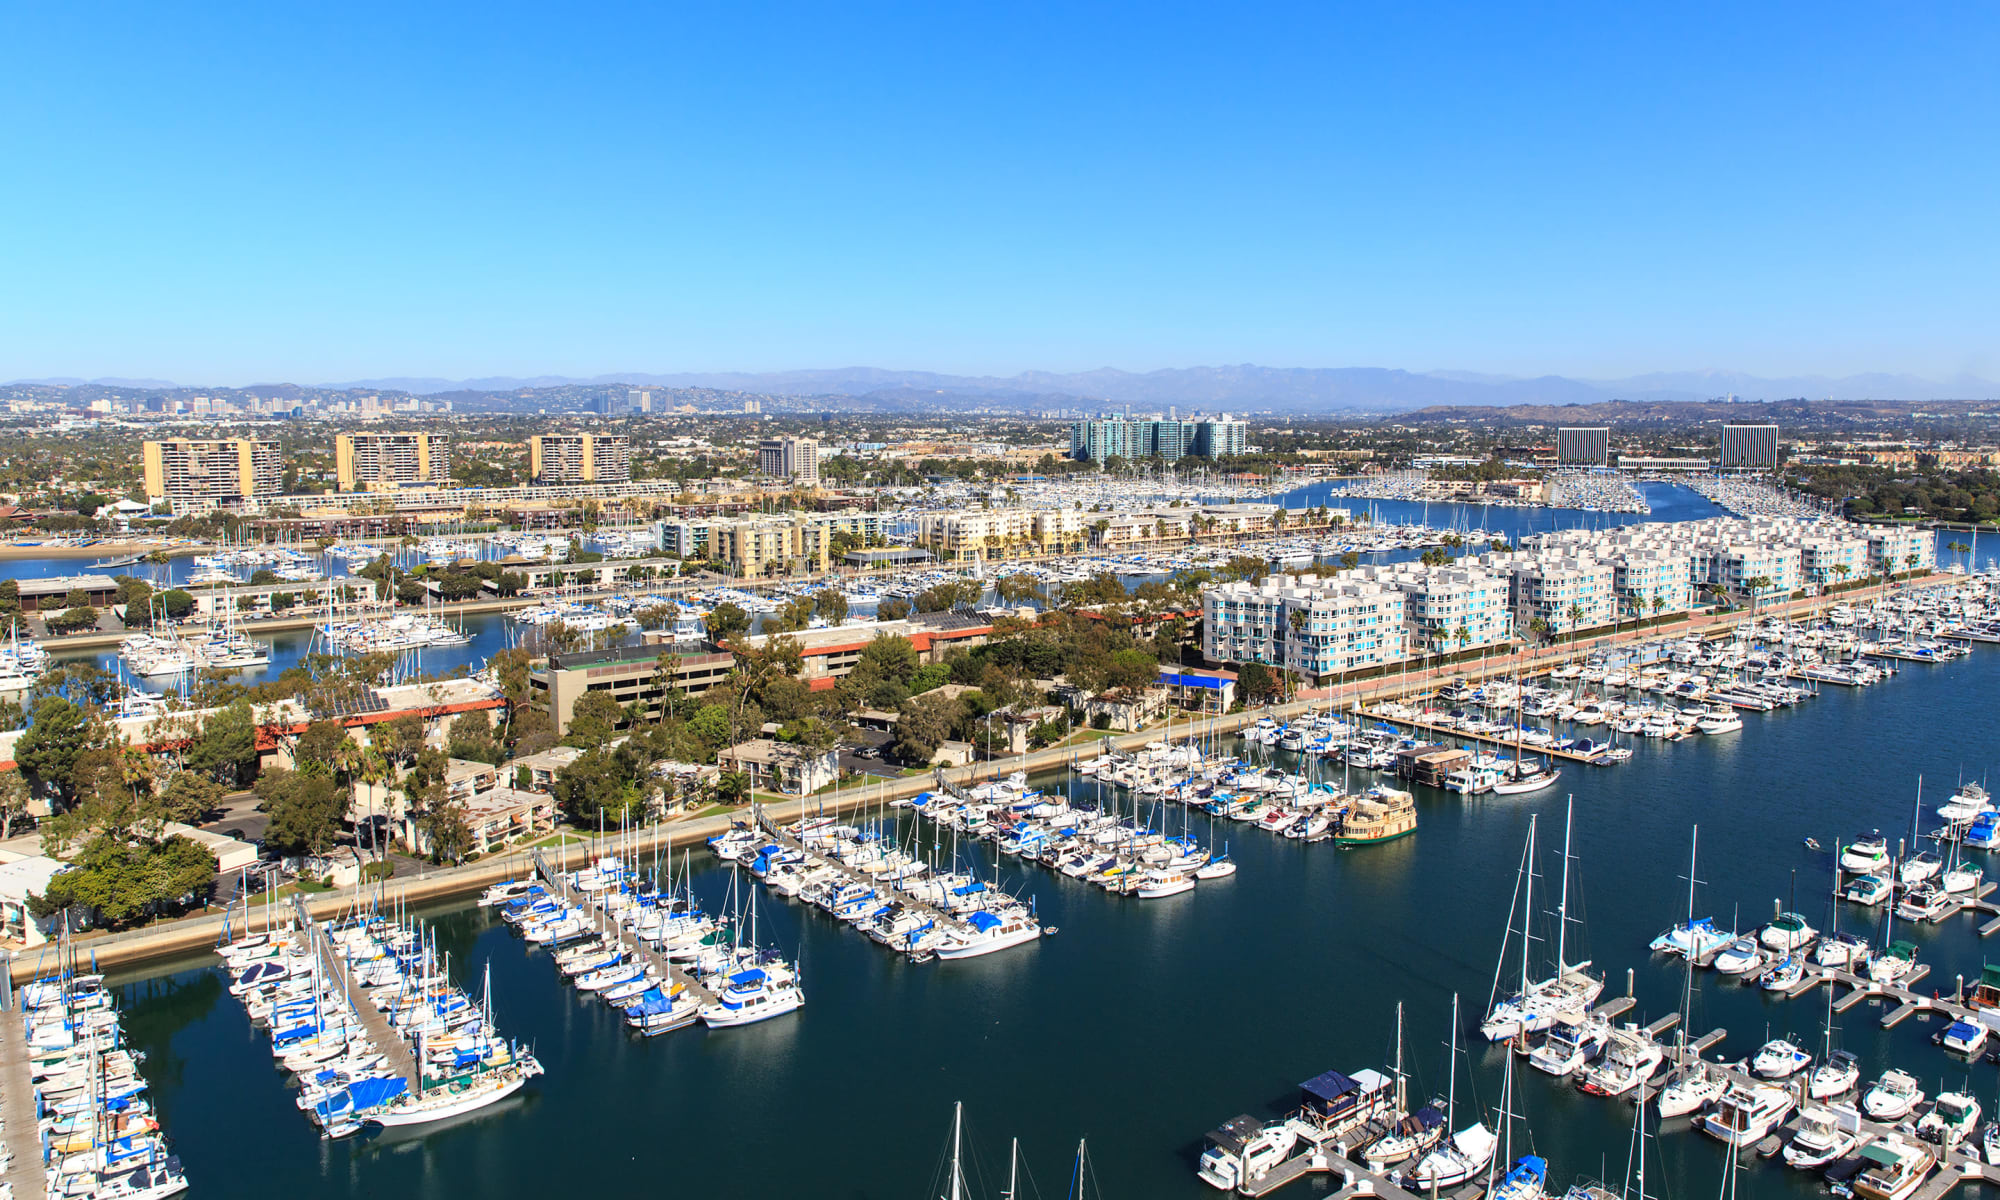 Aerial photo of the marina next to Esprit Marina del Rey in Marina del Rey, California